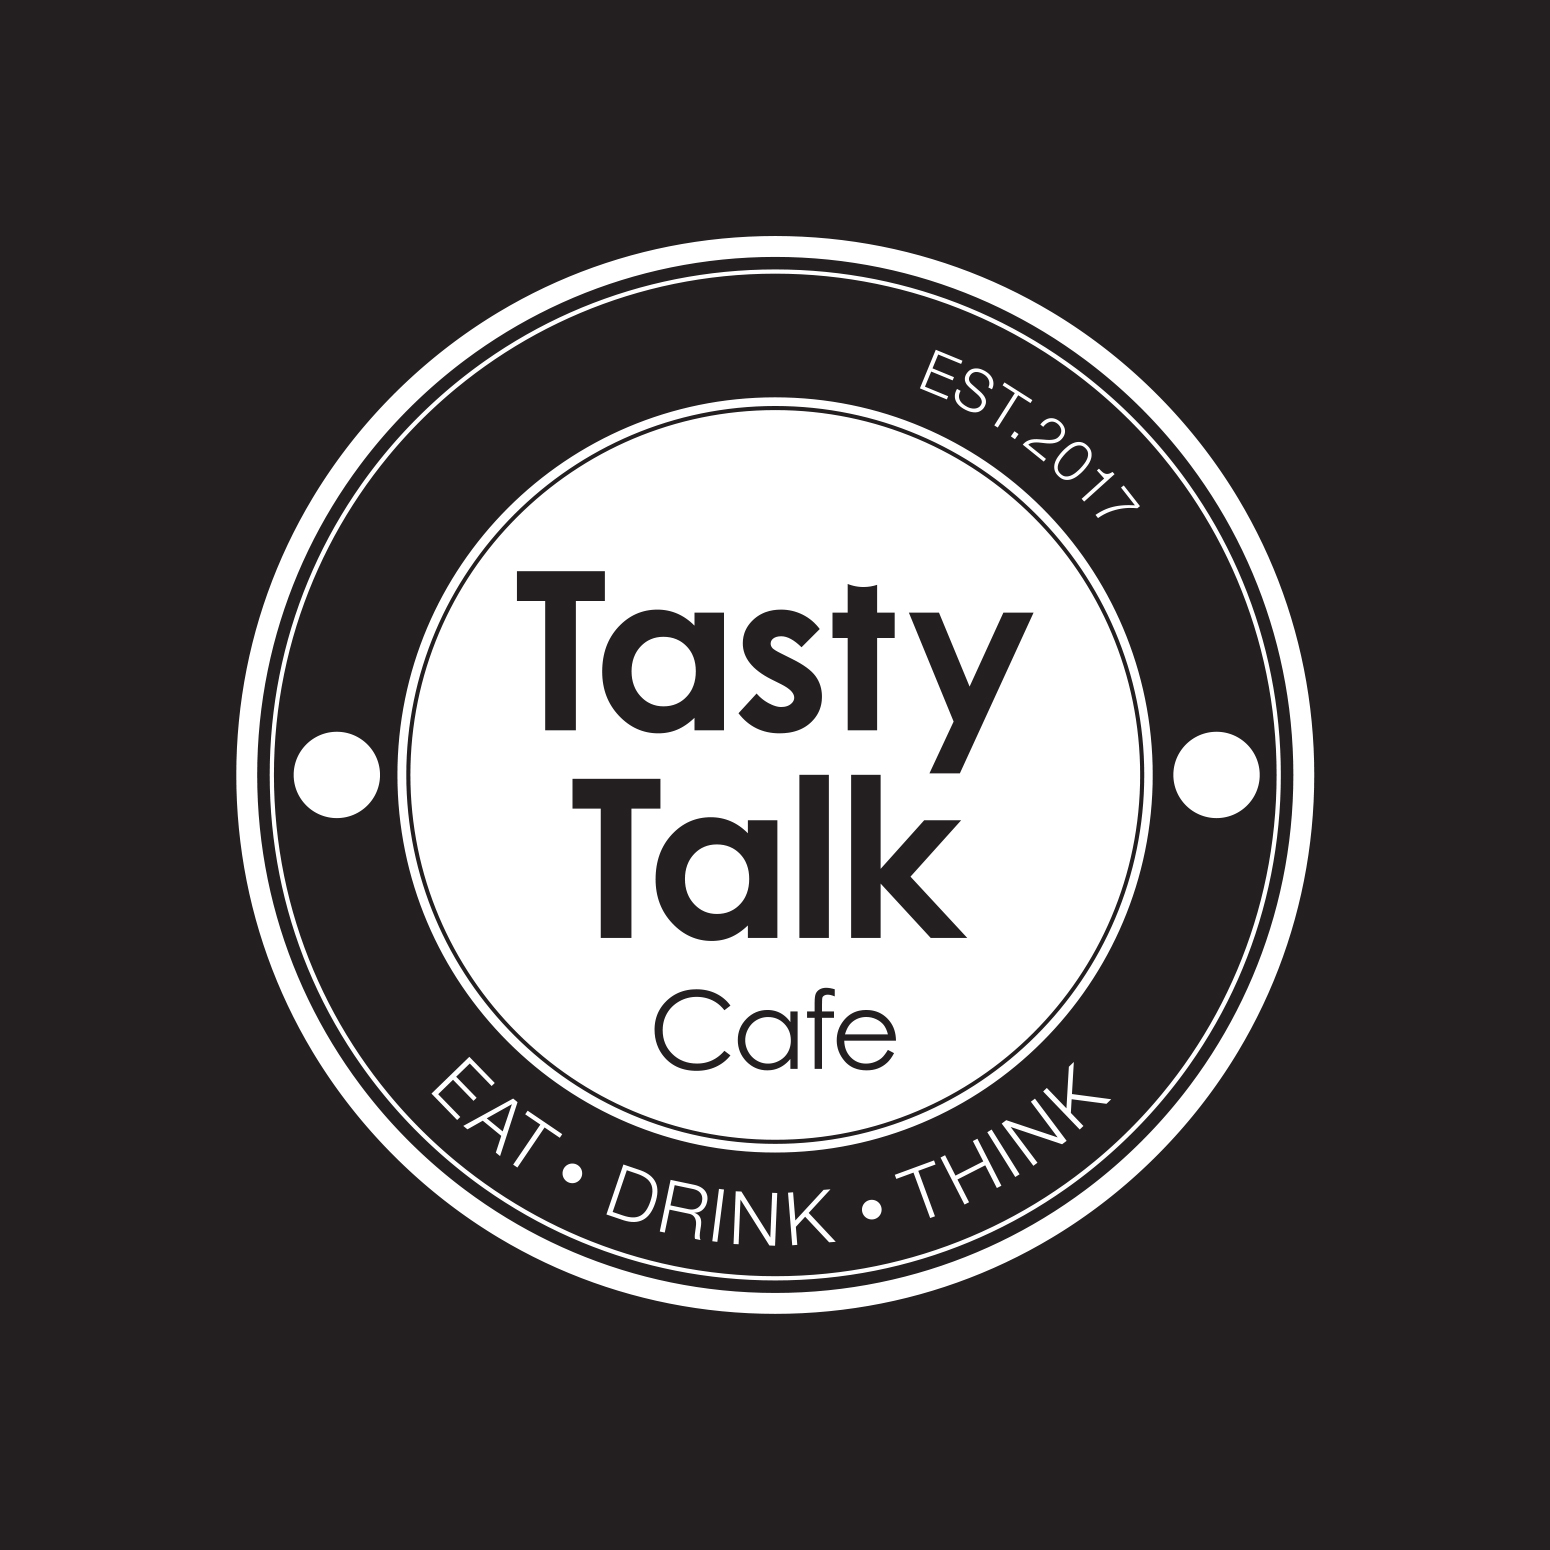 Tasty Talk Cafe